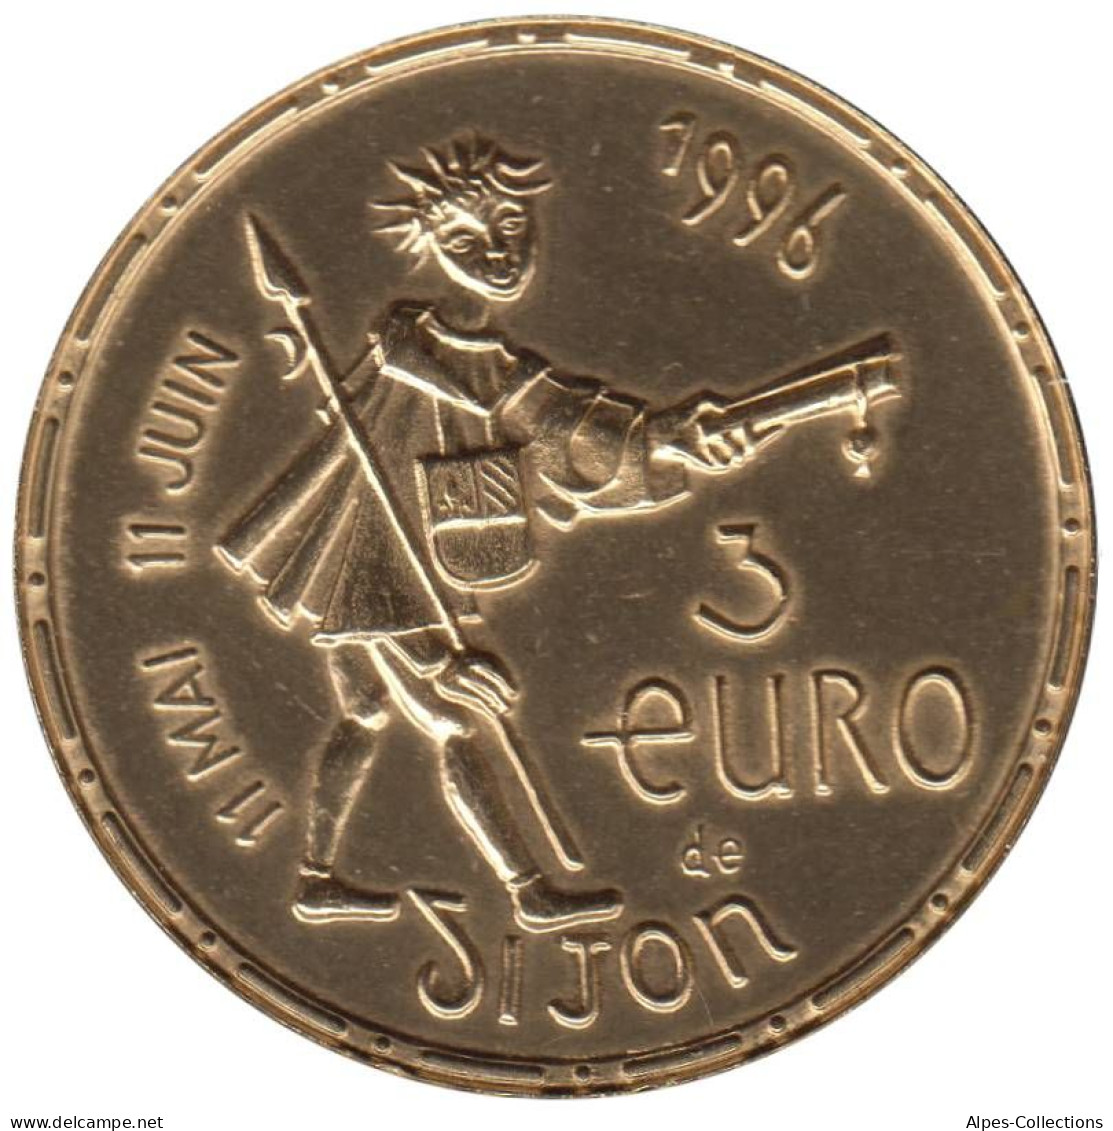 DIJON - EU0030.1 - 3 EURO DES VILLES - Réf: NR - 1996 - Euro Der Städte